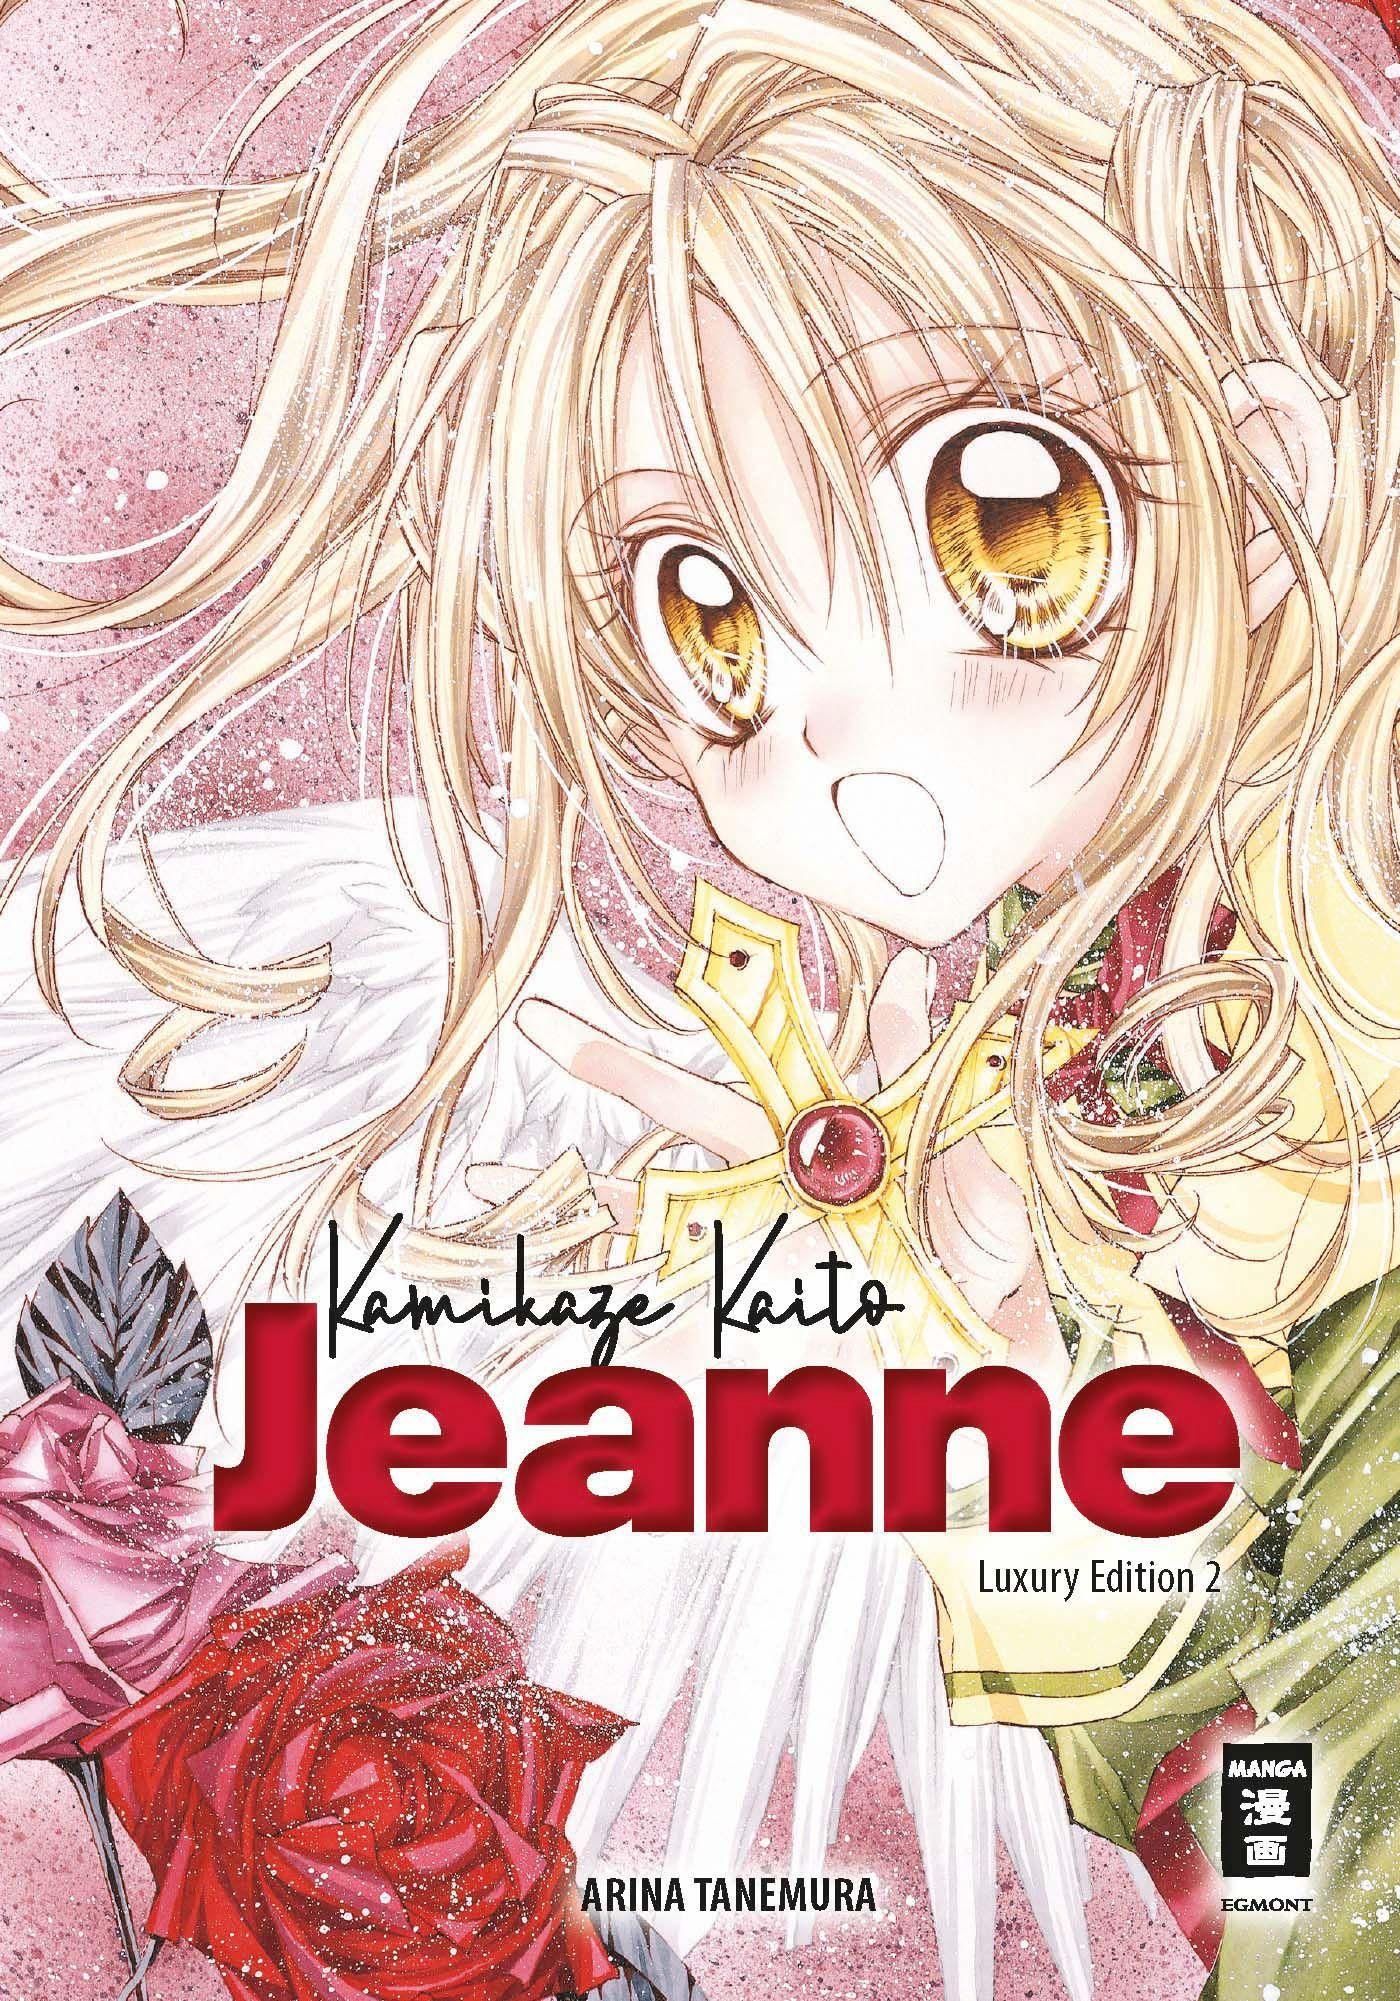 Kamikaze Kaito Jeanne - Luxury Edition